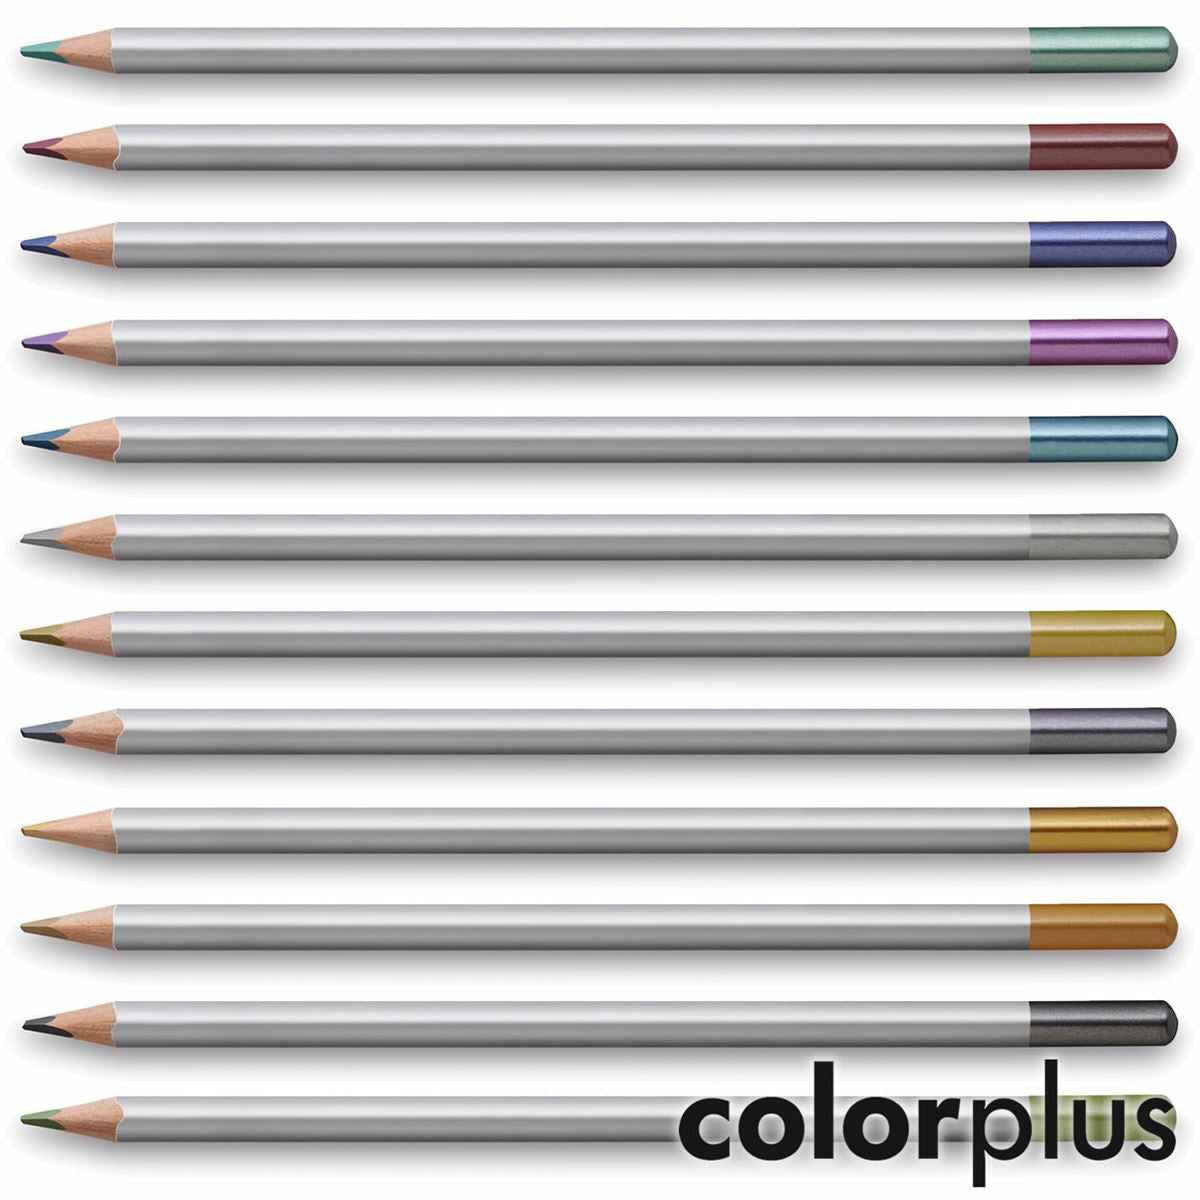 Lamy Colorplus Metallic Colouring Pencils - Pack of 12